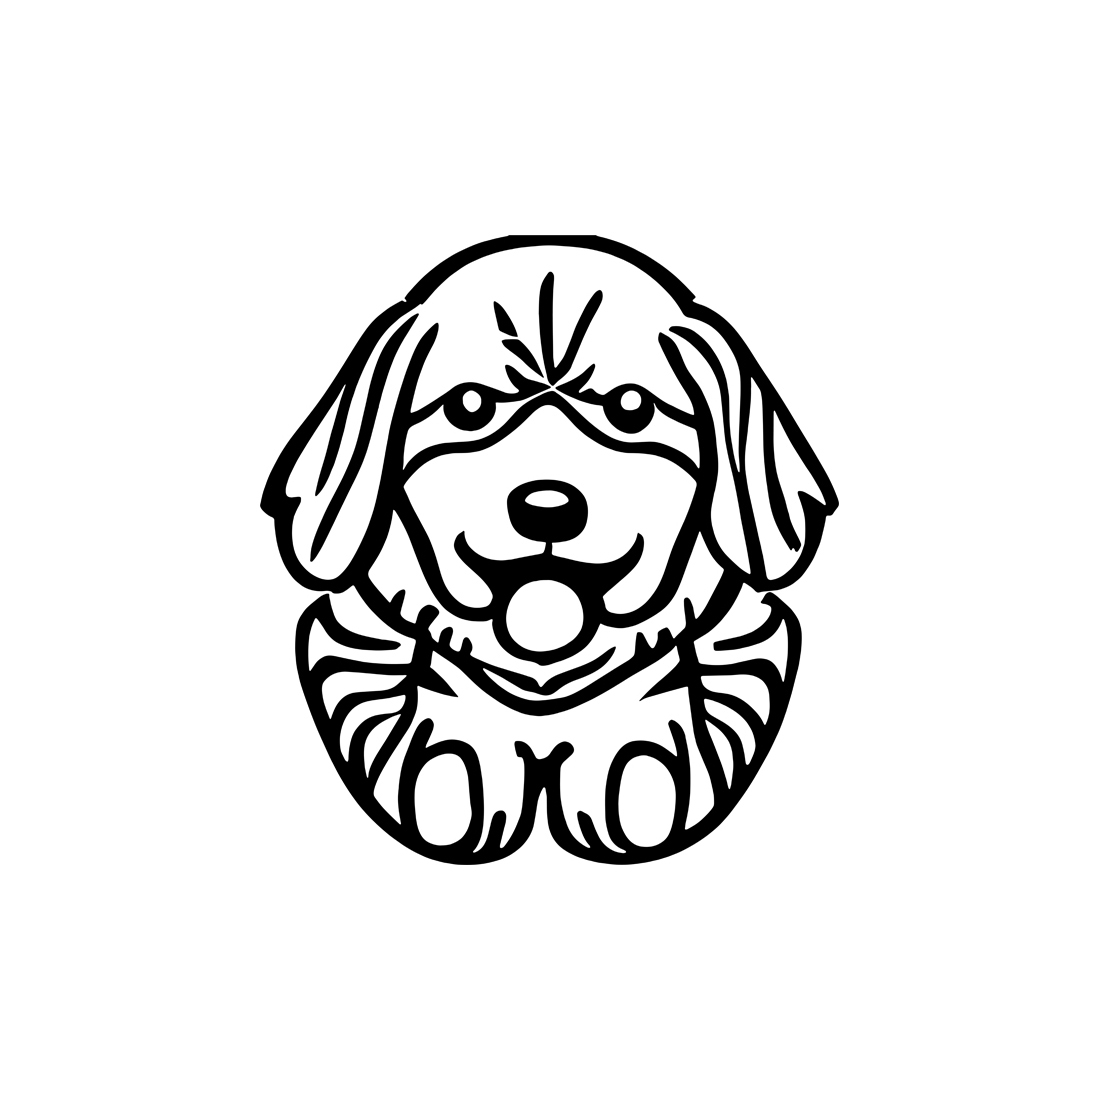 A Cute Dog logo Illustration cover image.